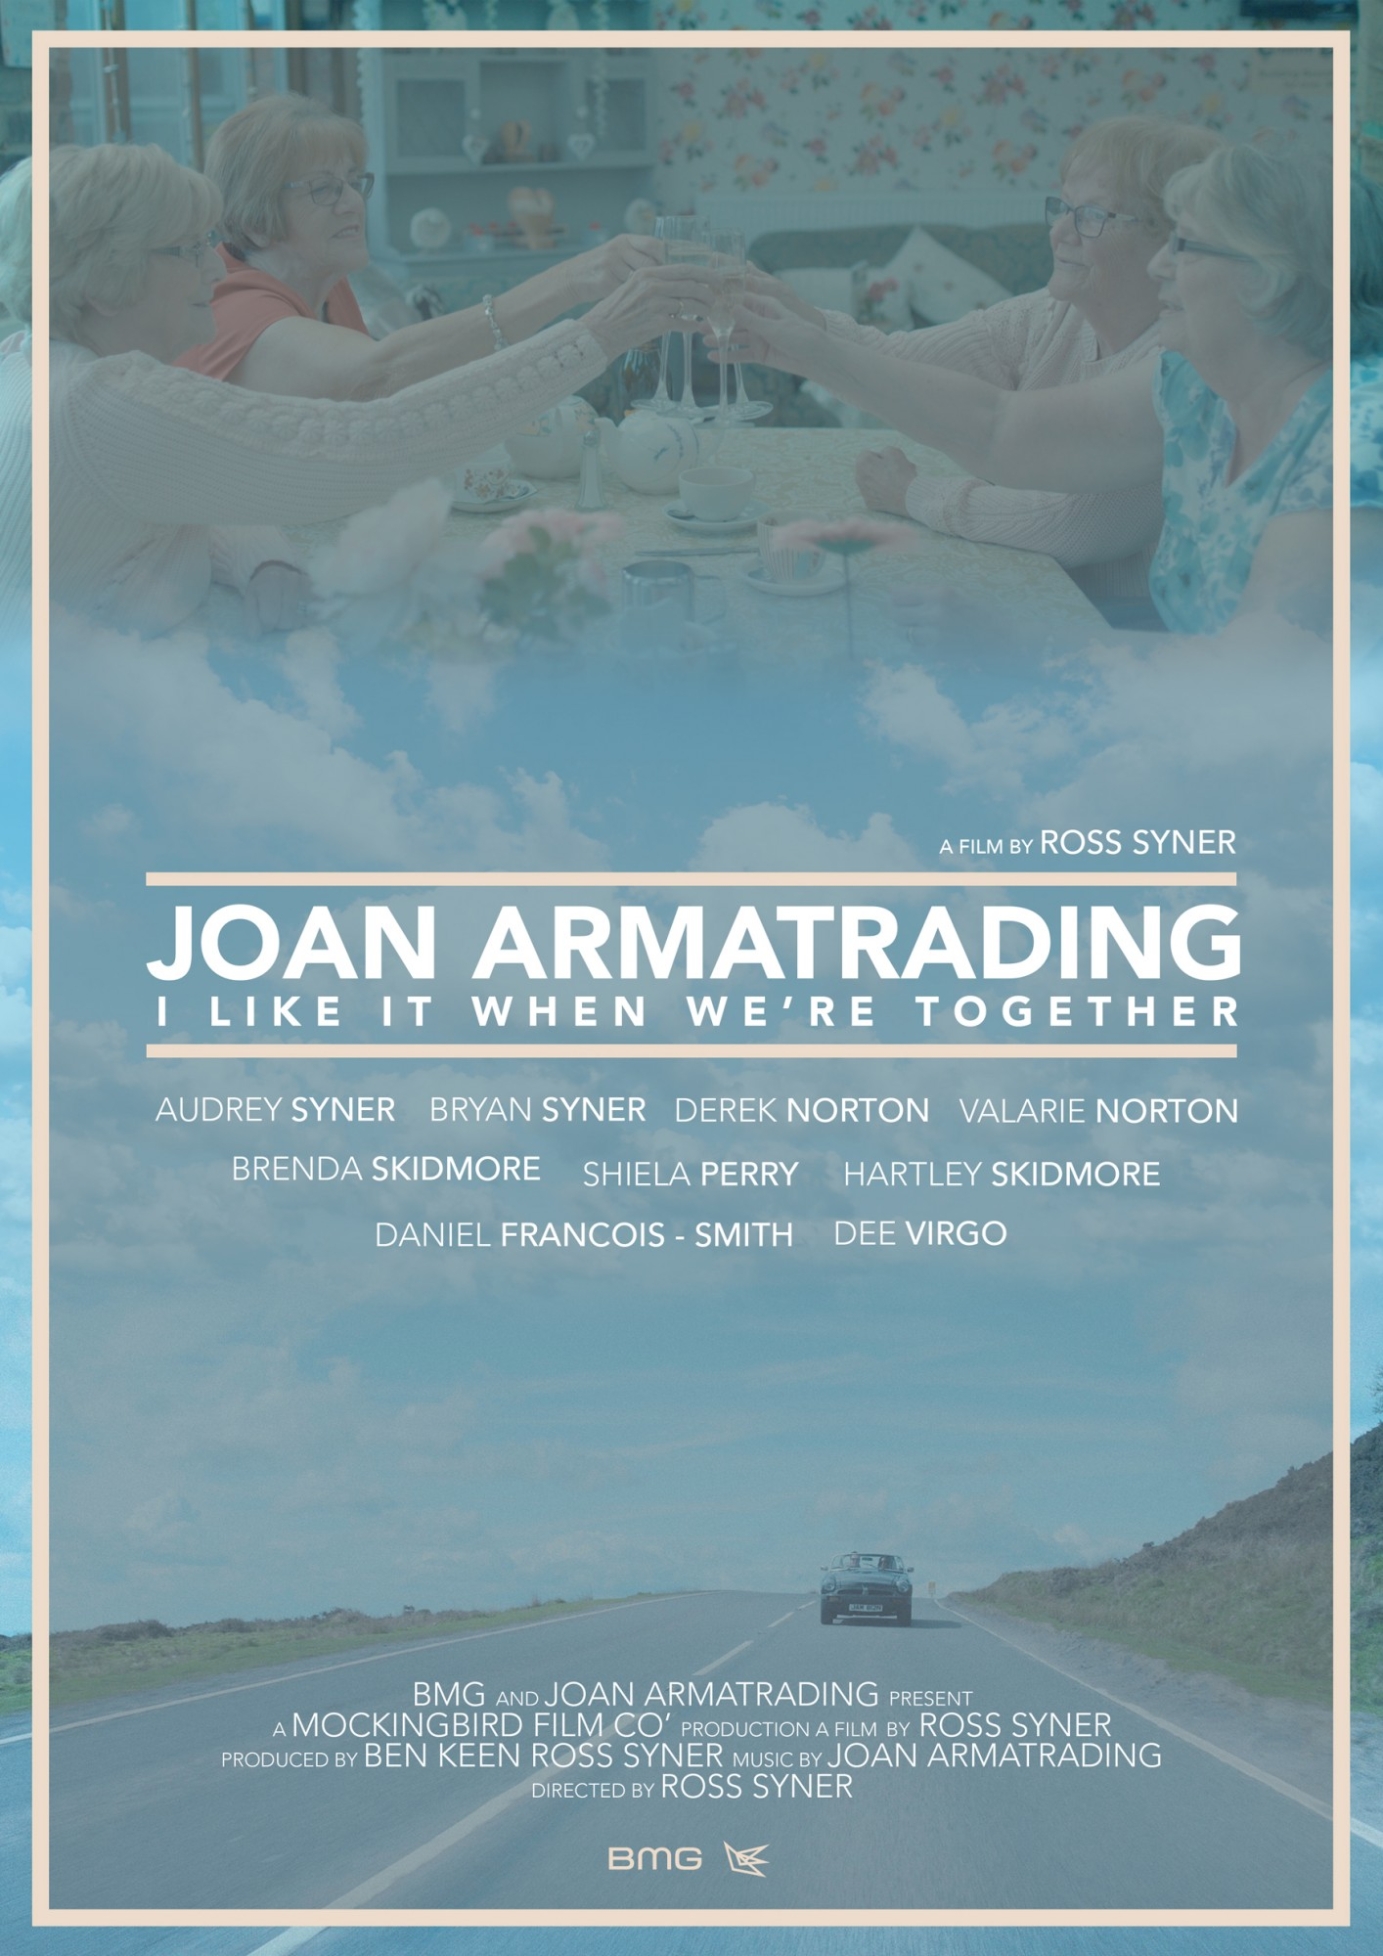 Music video for Joan Armatrading by Mockingbird Film Co